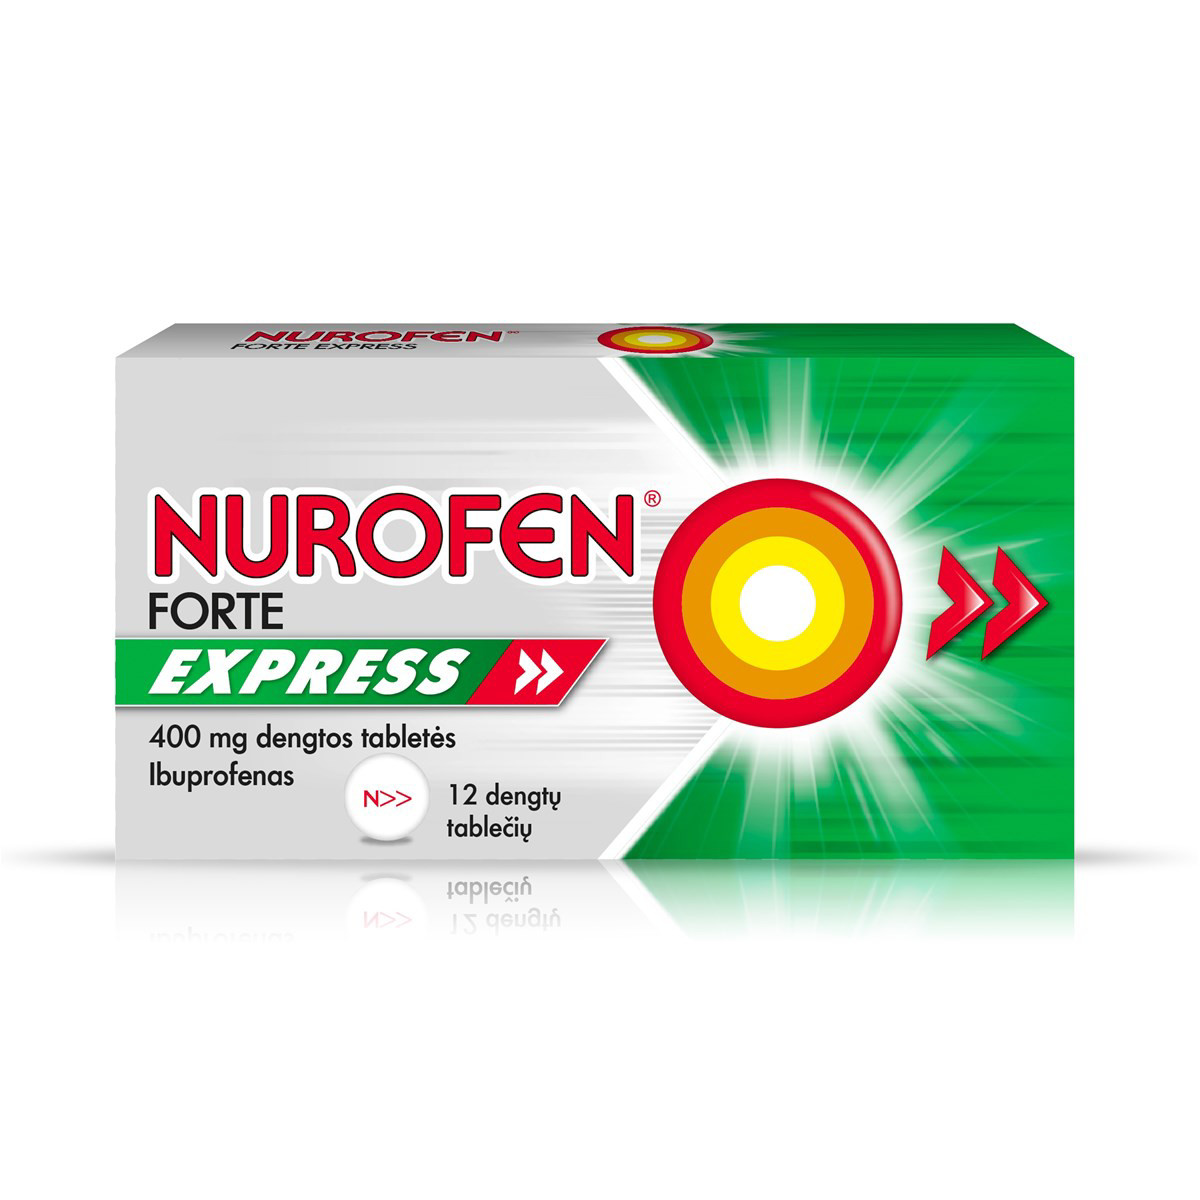 NUROFEN FORTE EXPRESS, 400 mg, dengtos tabletės, N12